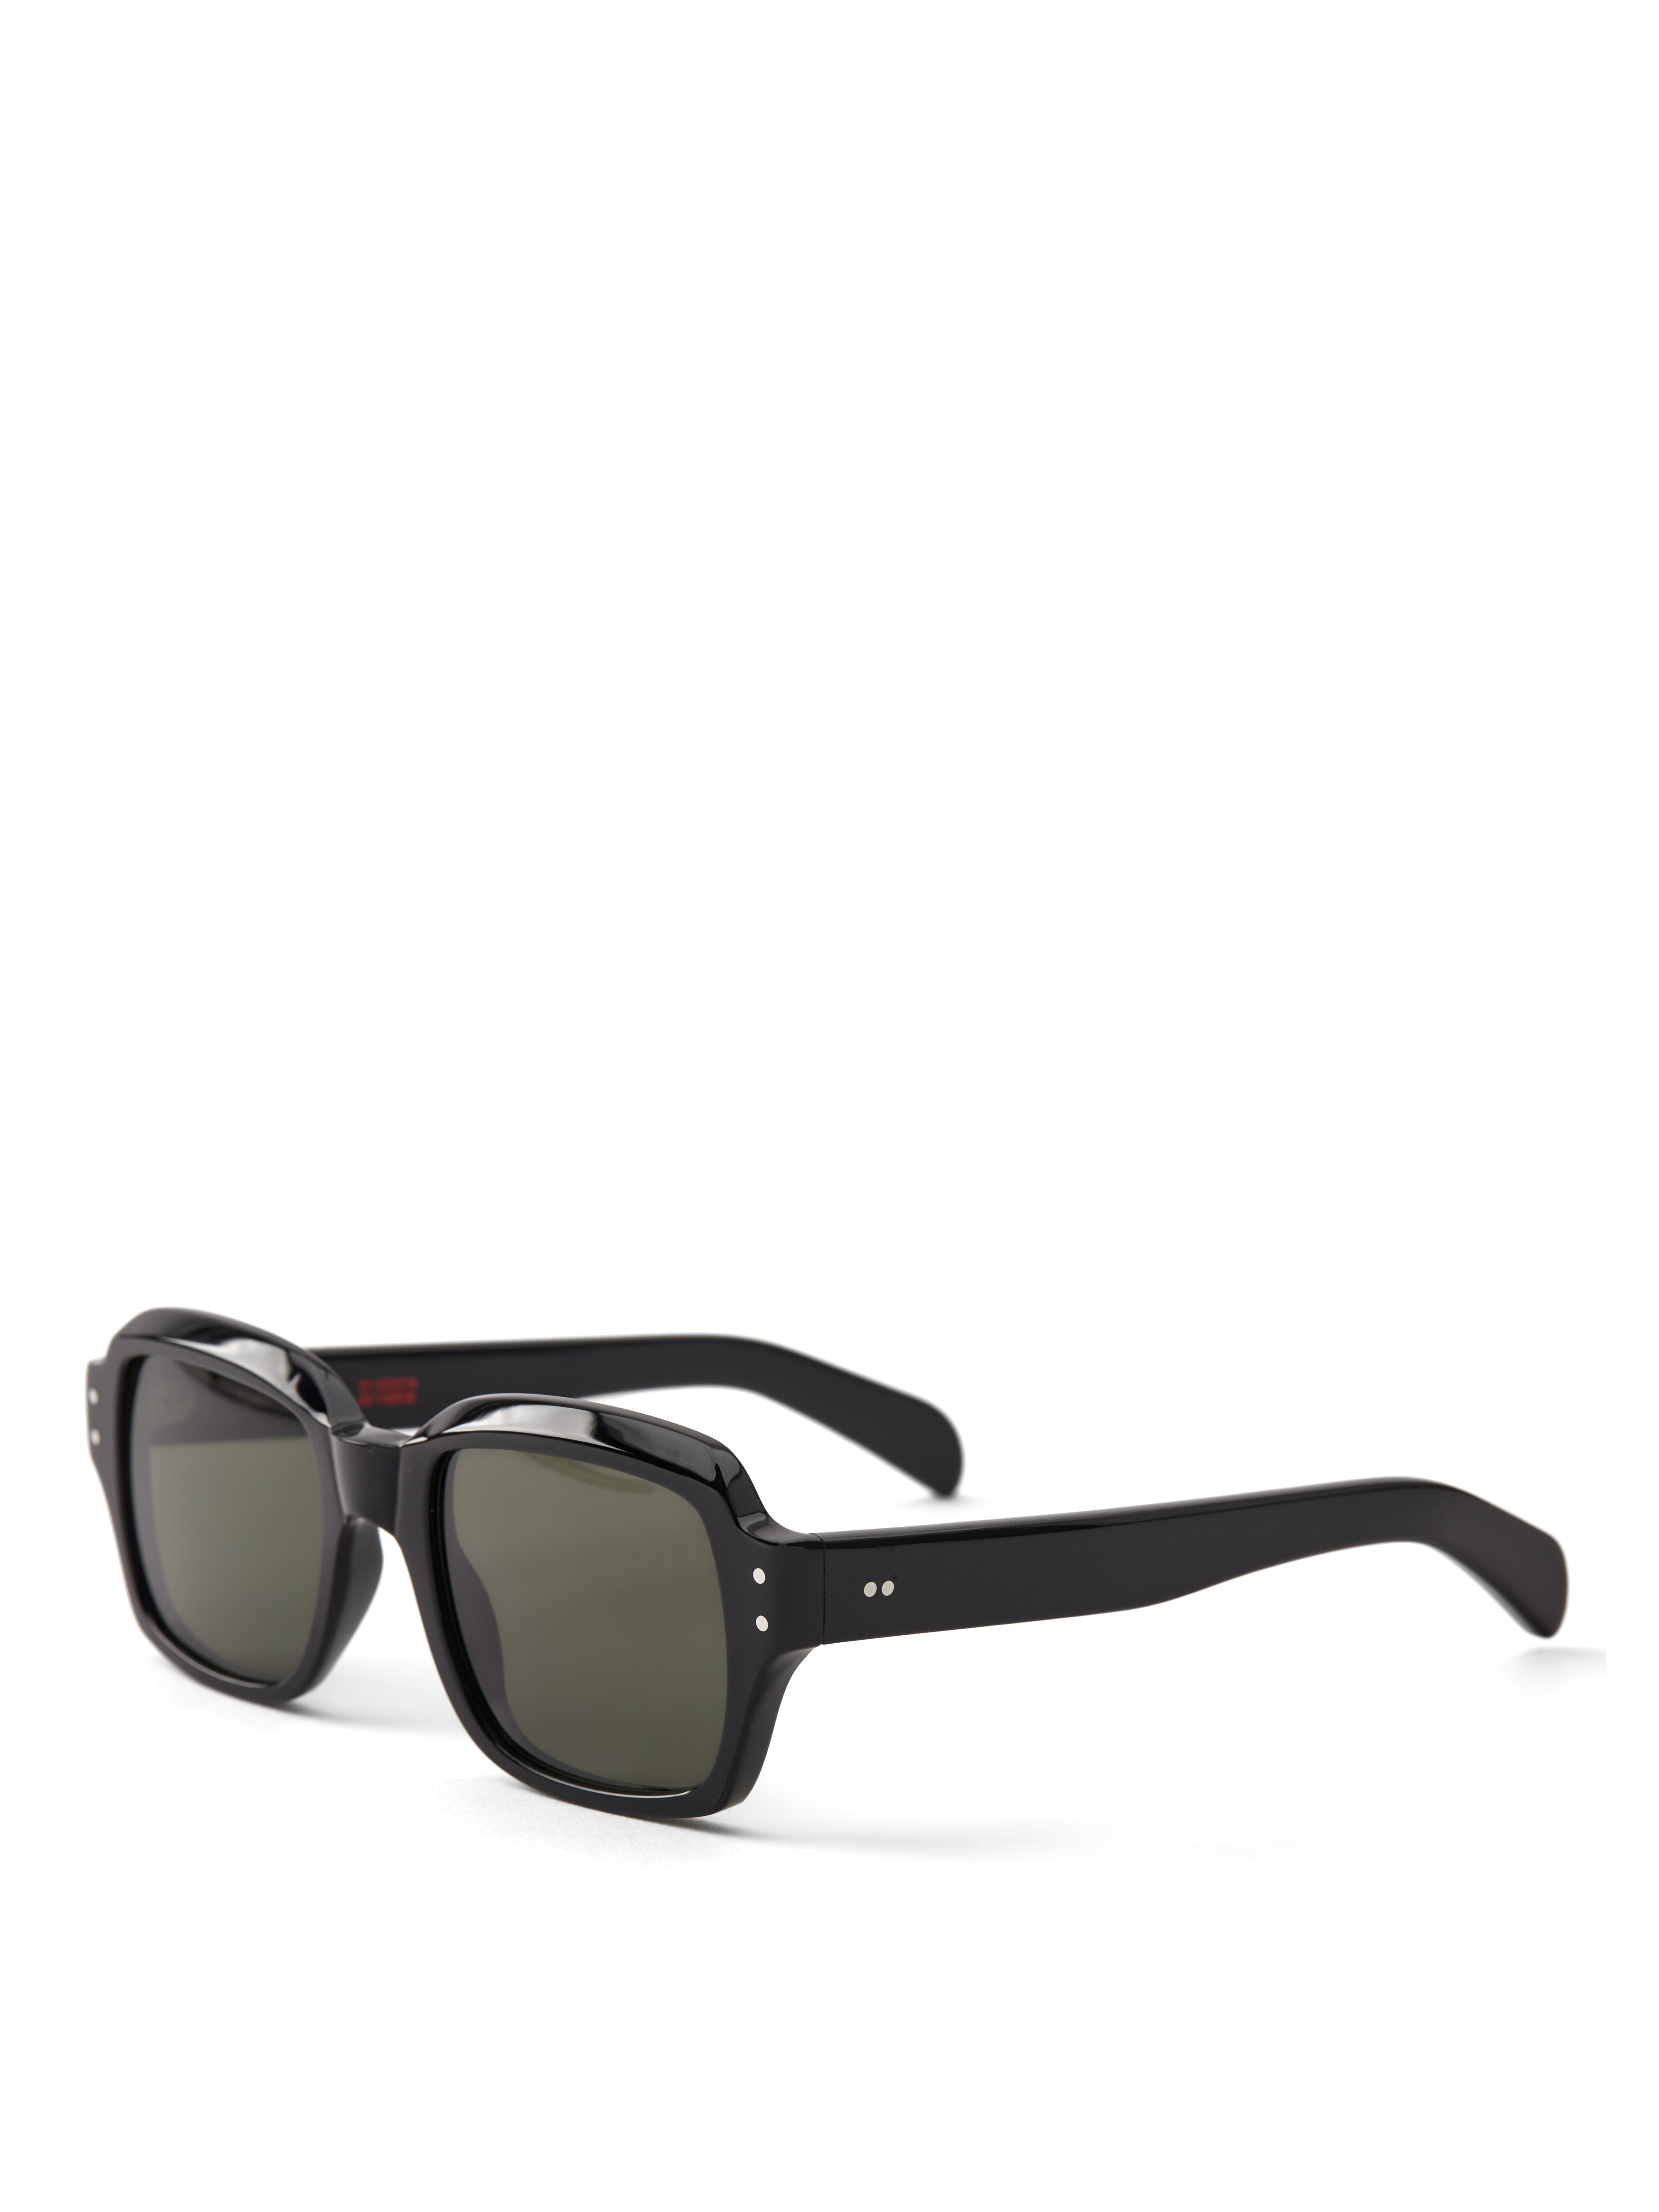 Cubitts x Oliver Spencer Conduit Sunglasses Black